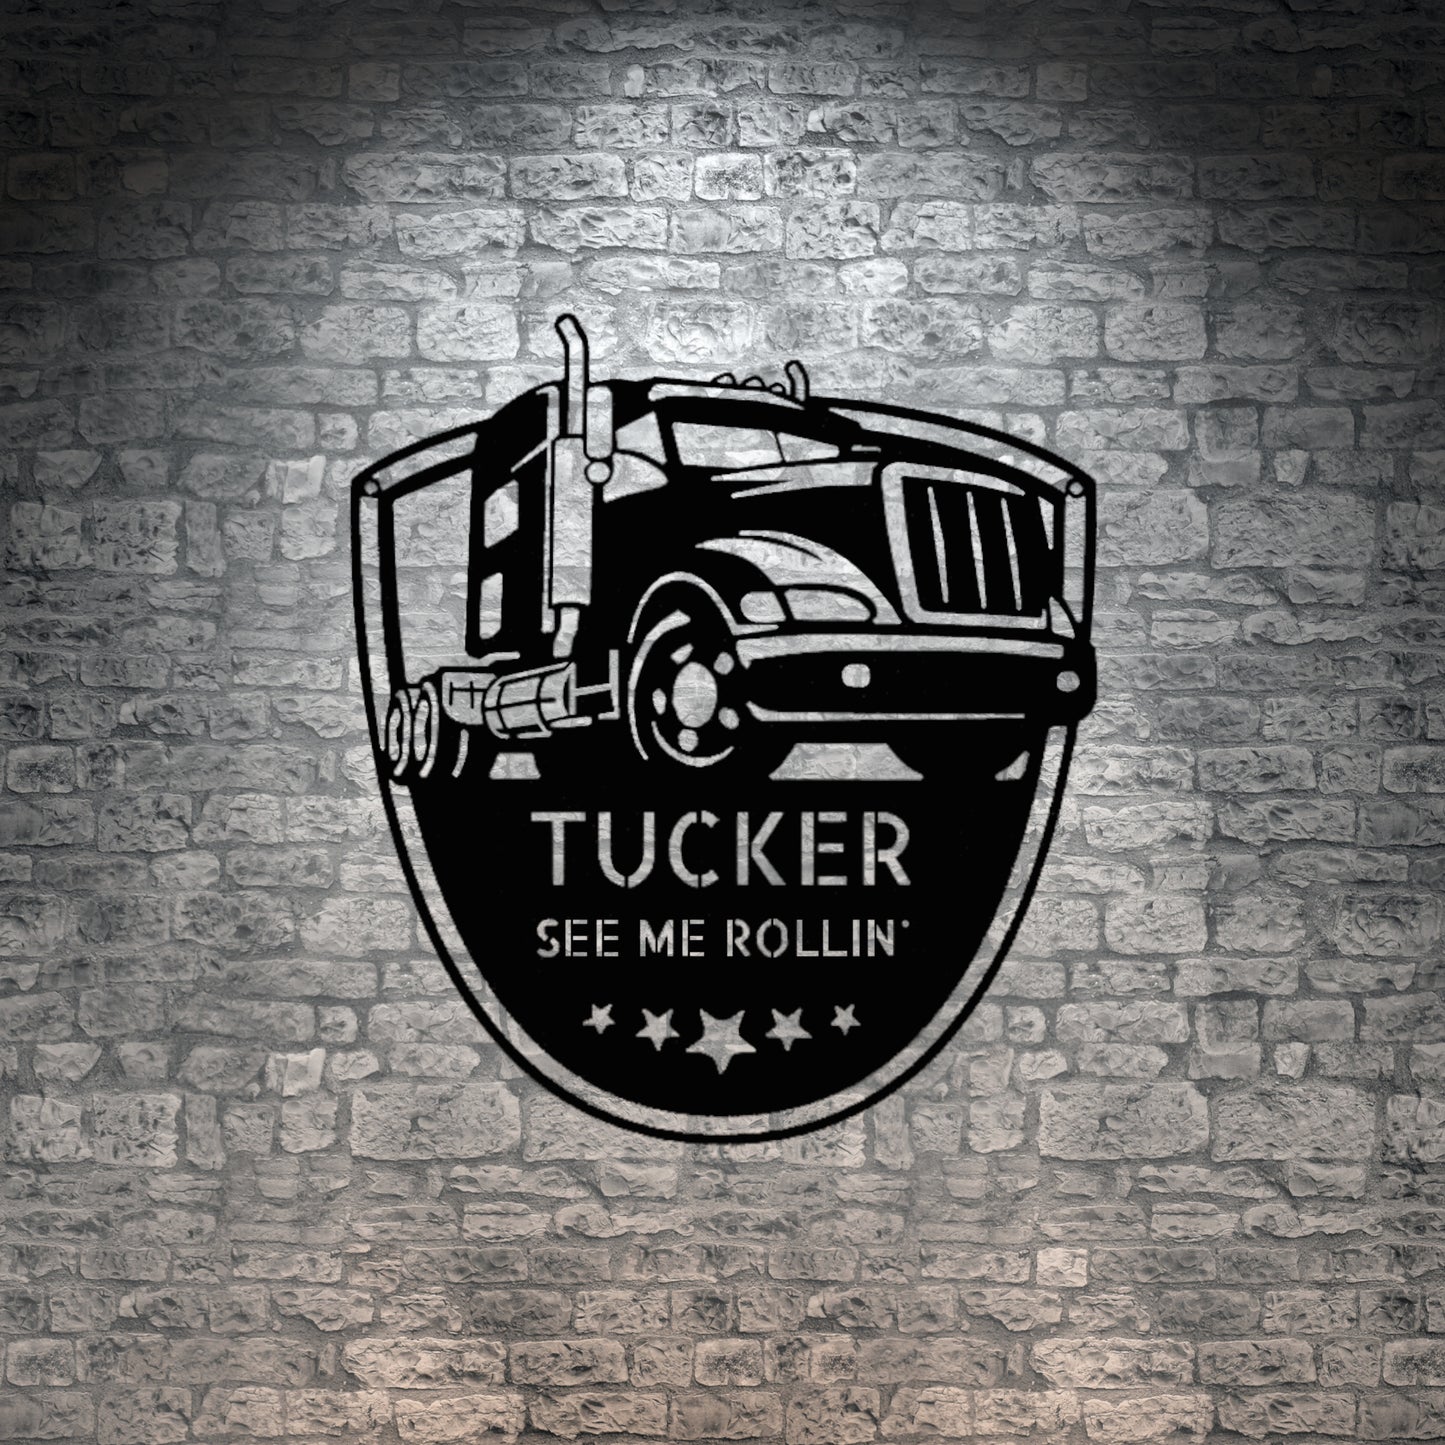 10-4 Trucker Metal Sign - Trucker Personalized Metal Sign - Metal Wall Sign For Trucker - Custom Trucker Metal Sign